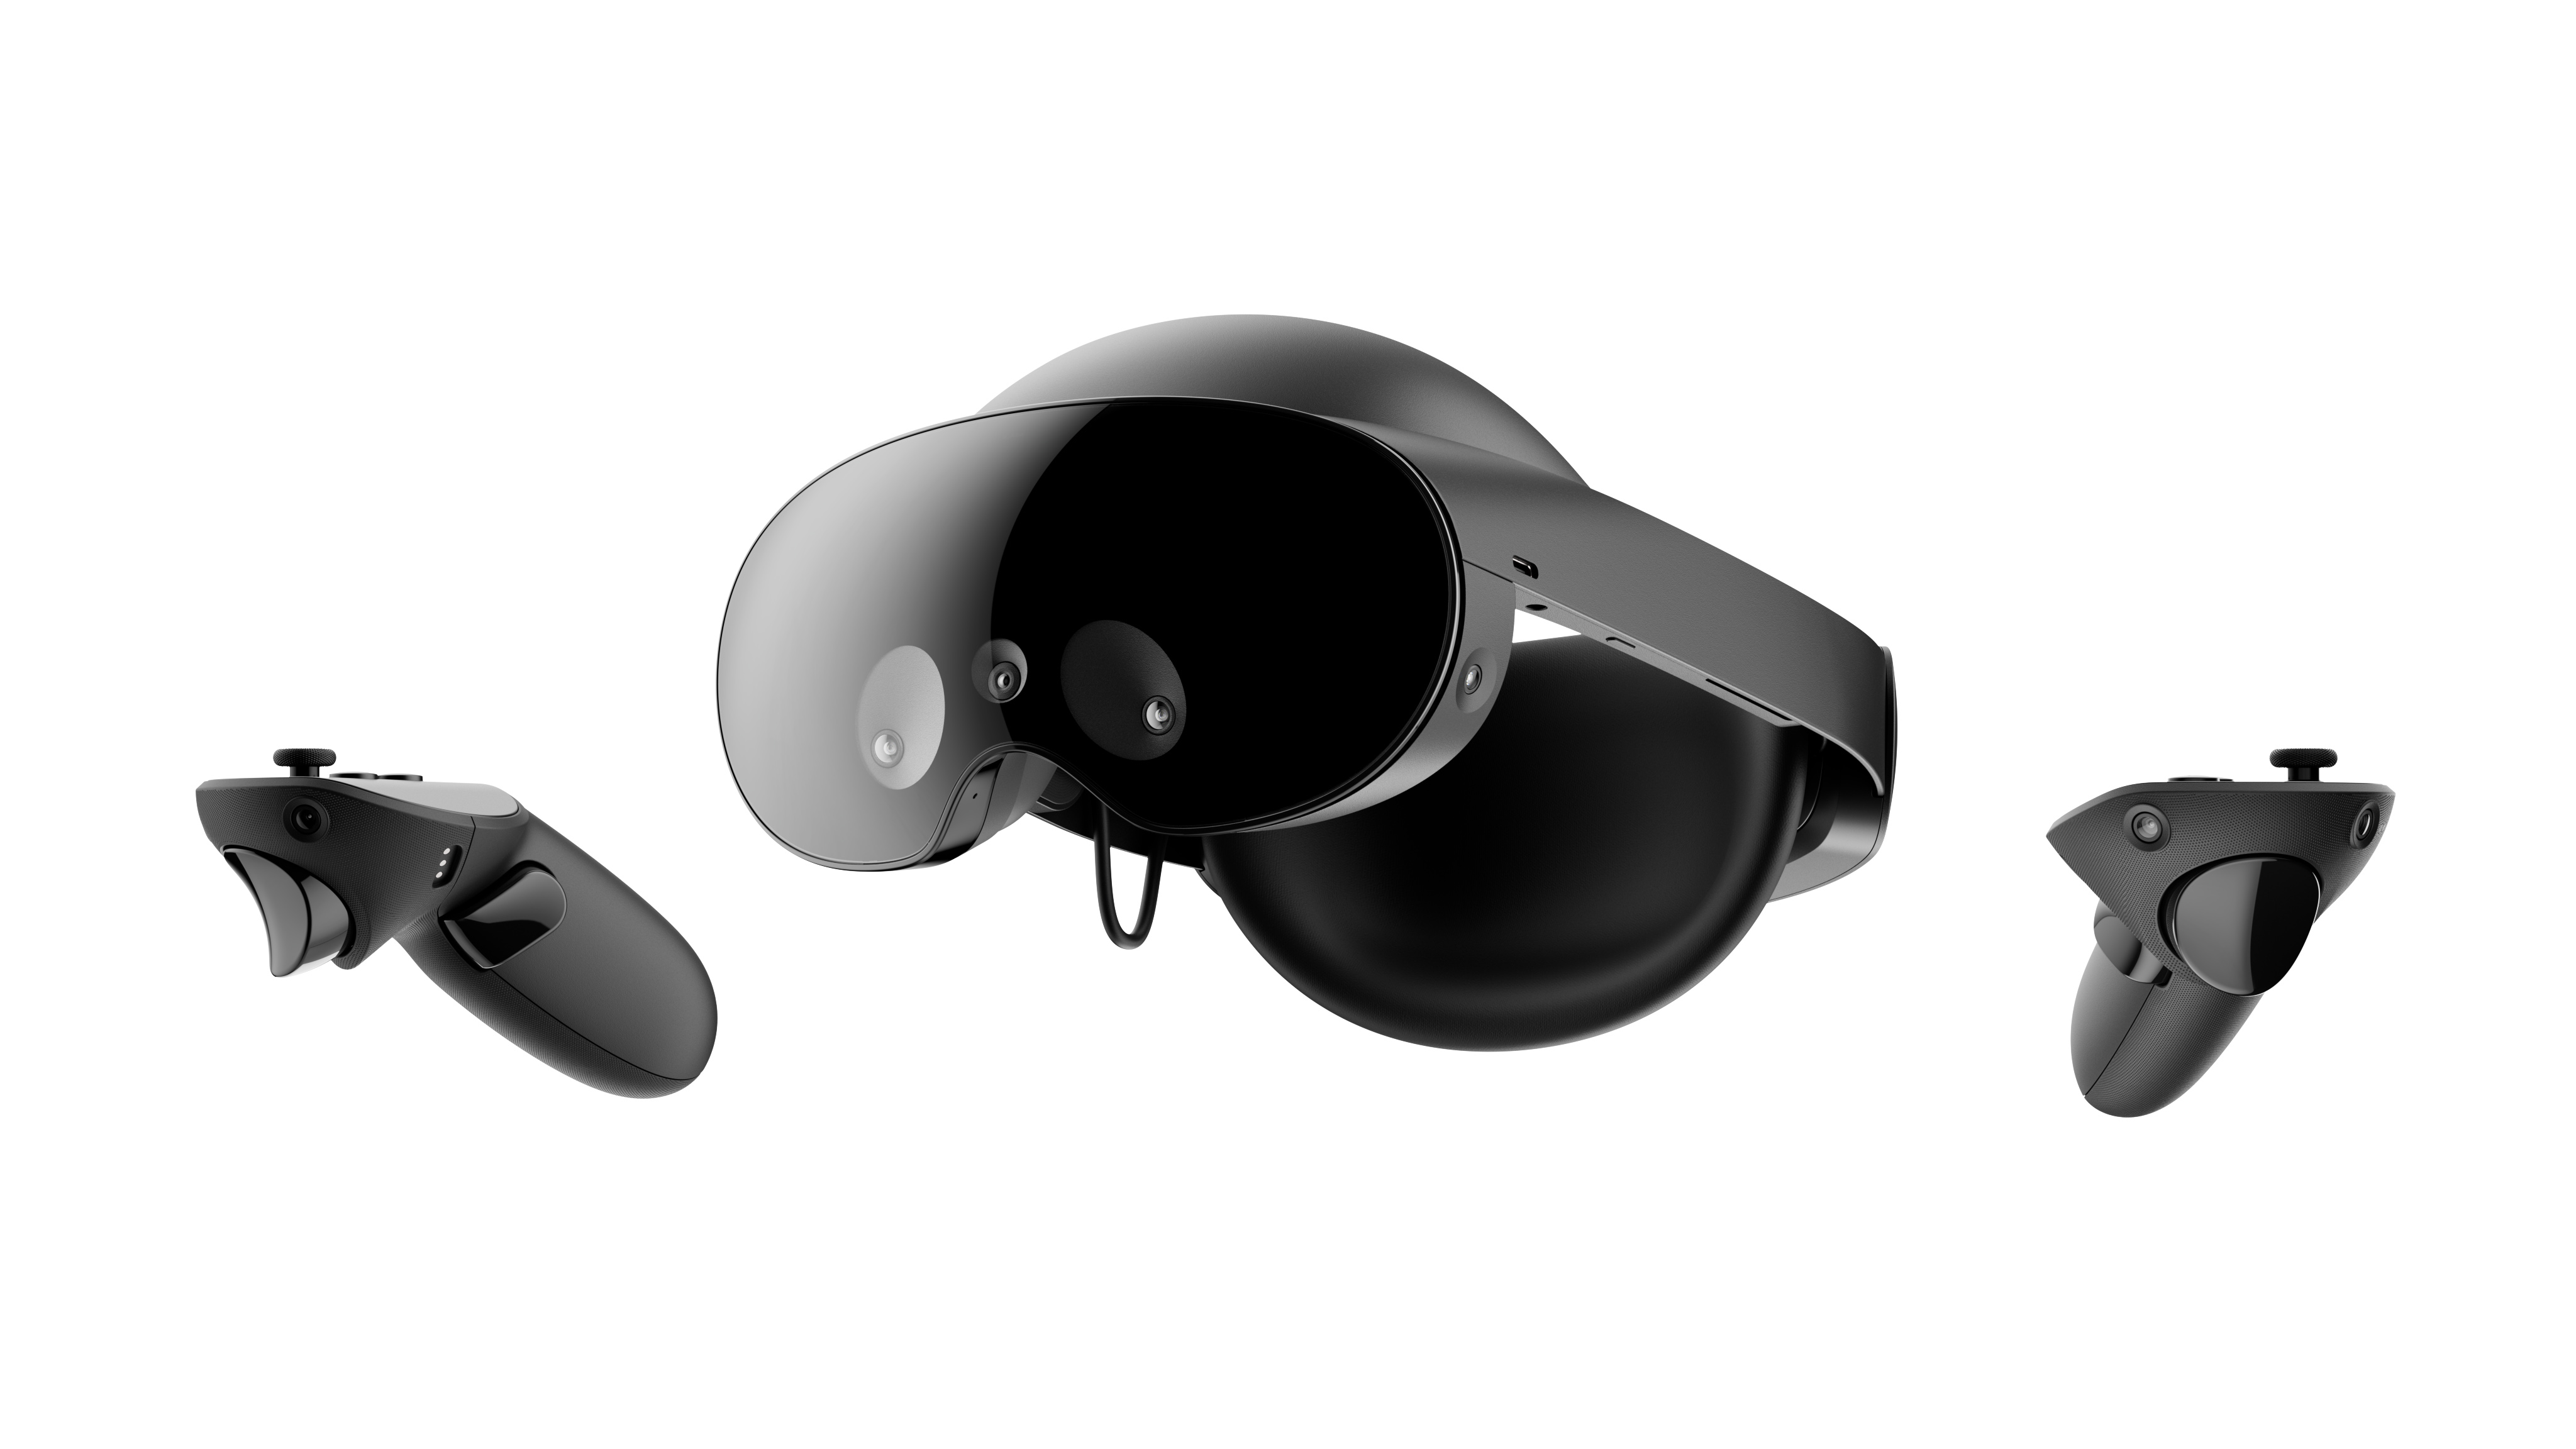 Juegos para Oculus Rift y realidad virtual - pag 2